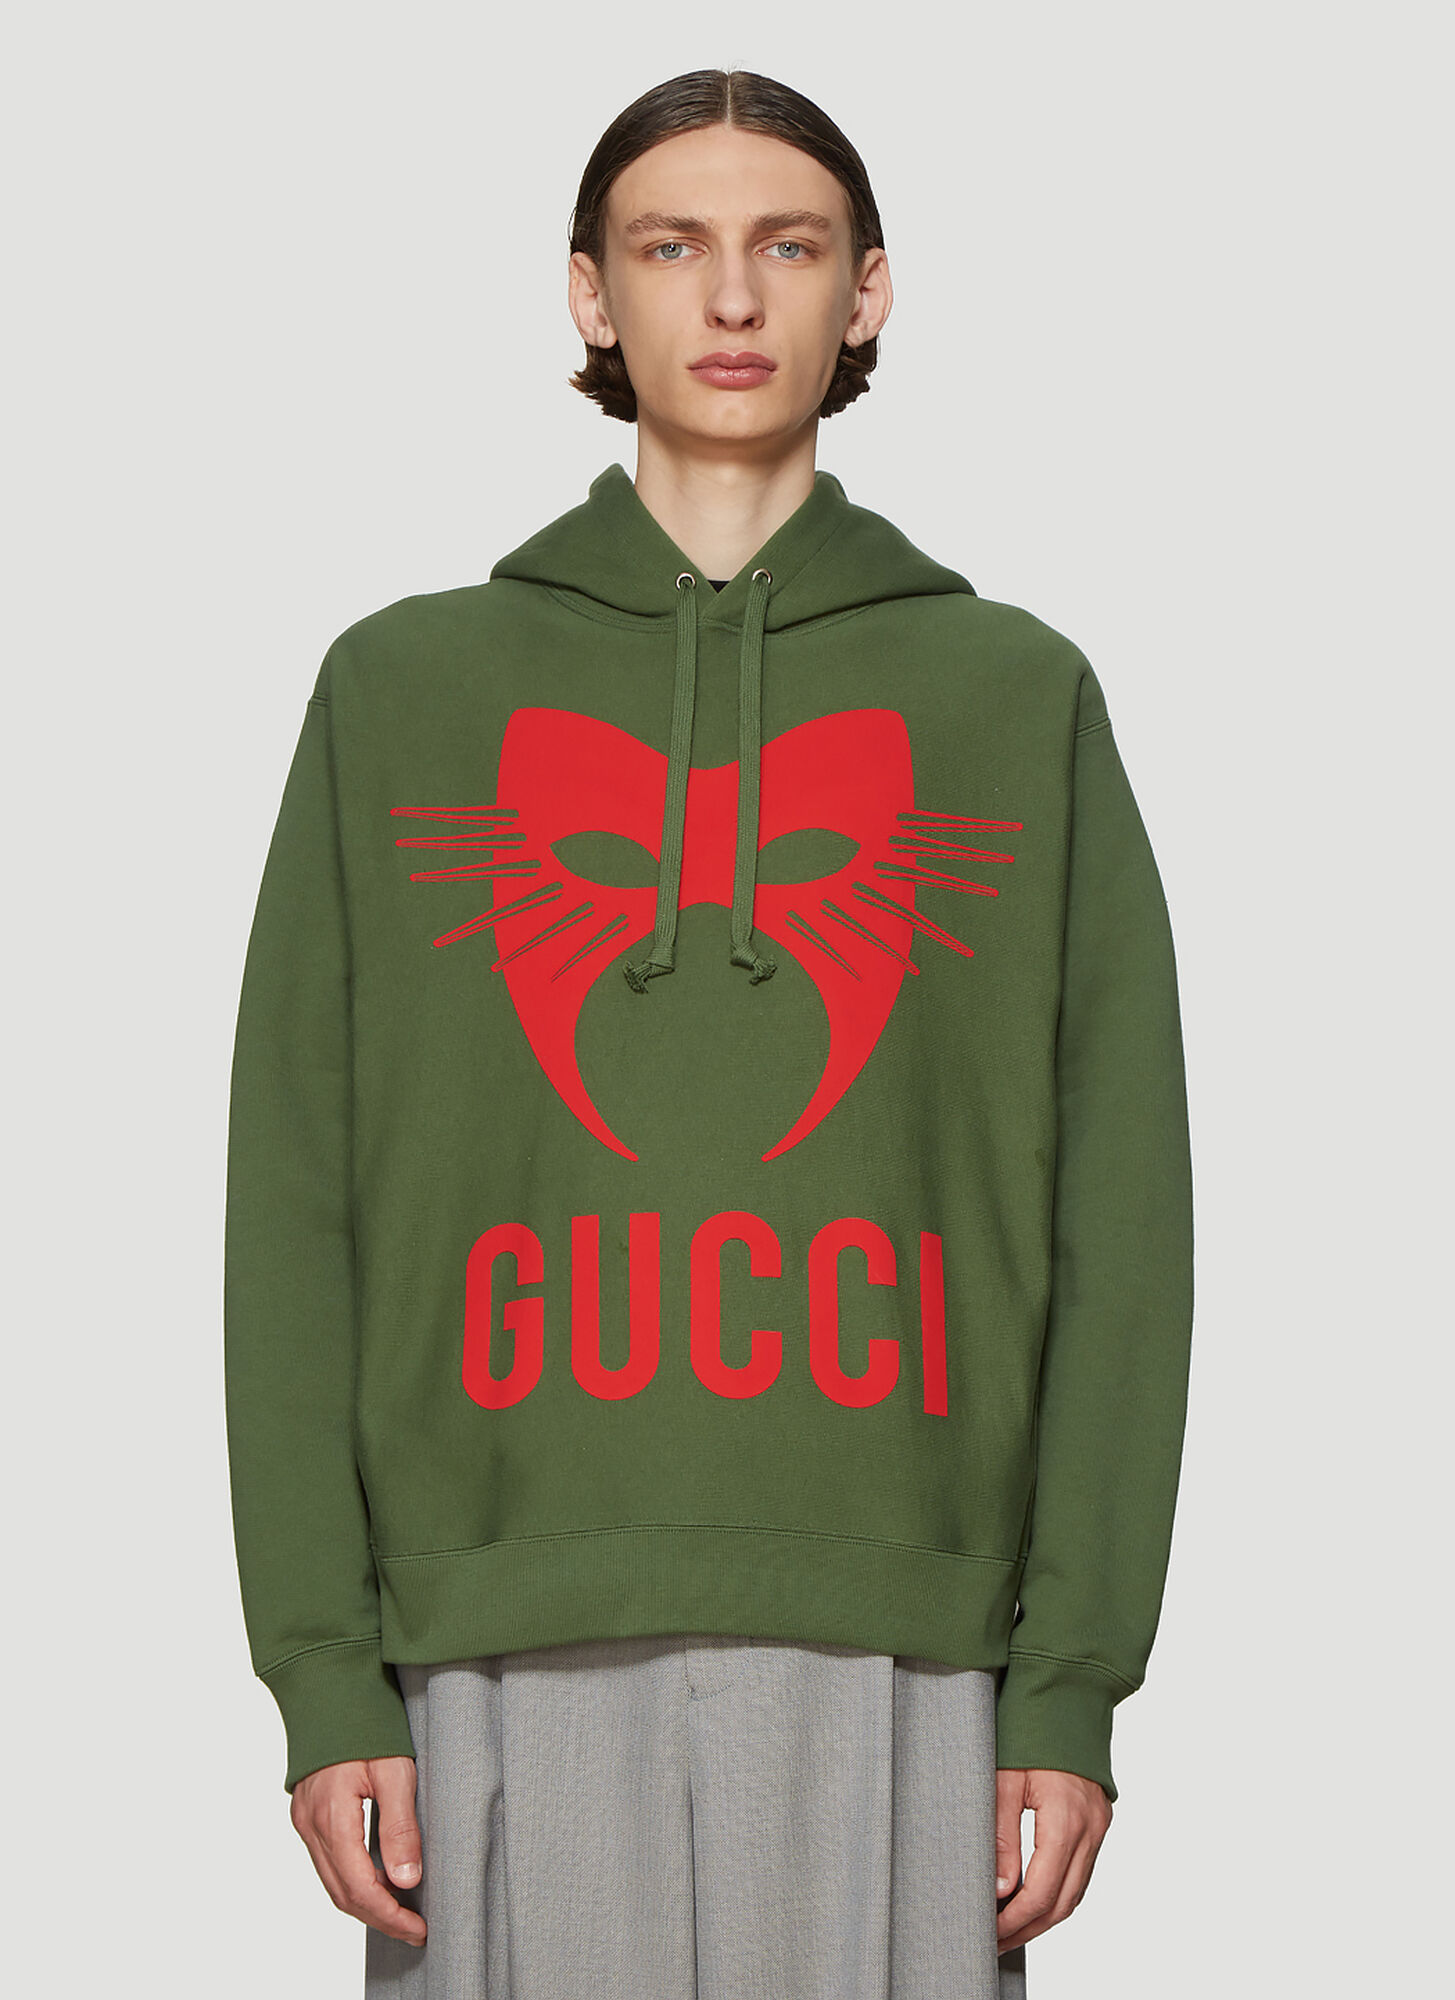 Gucci Manifesto Hooded Sweatshirt in Green size XS | The Fashionisto